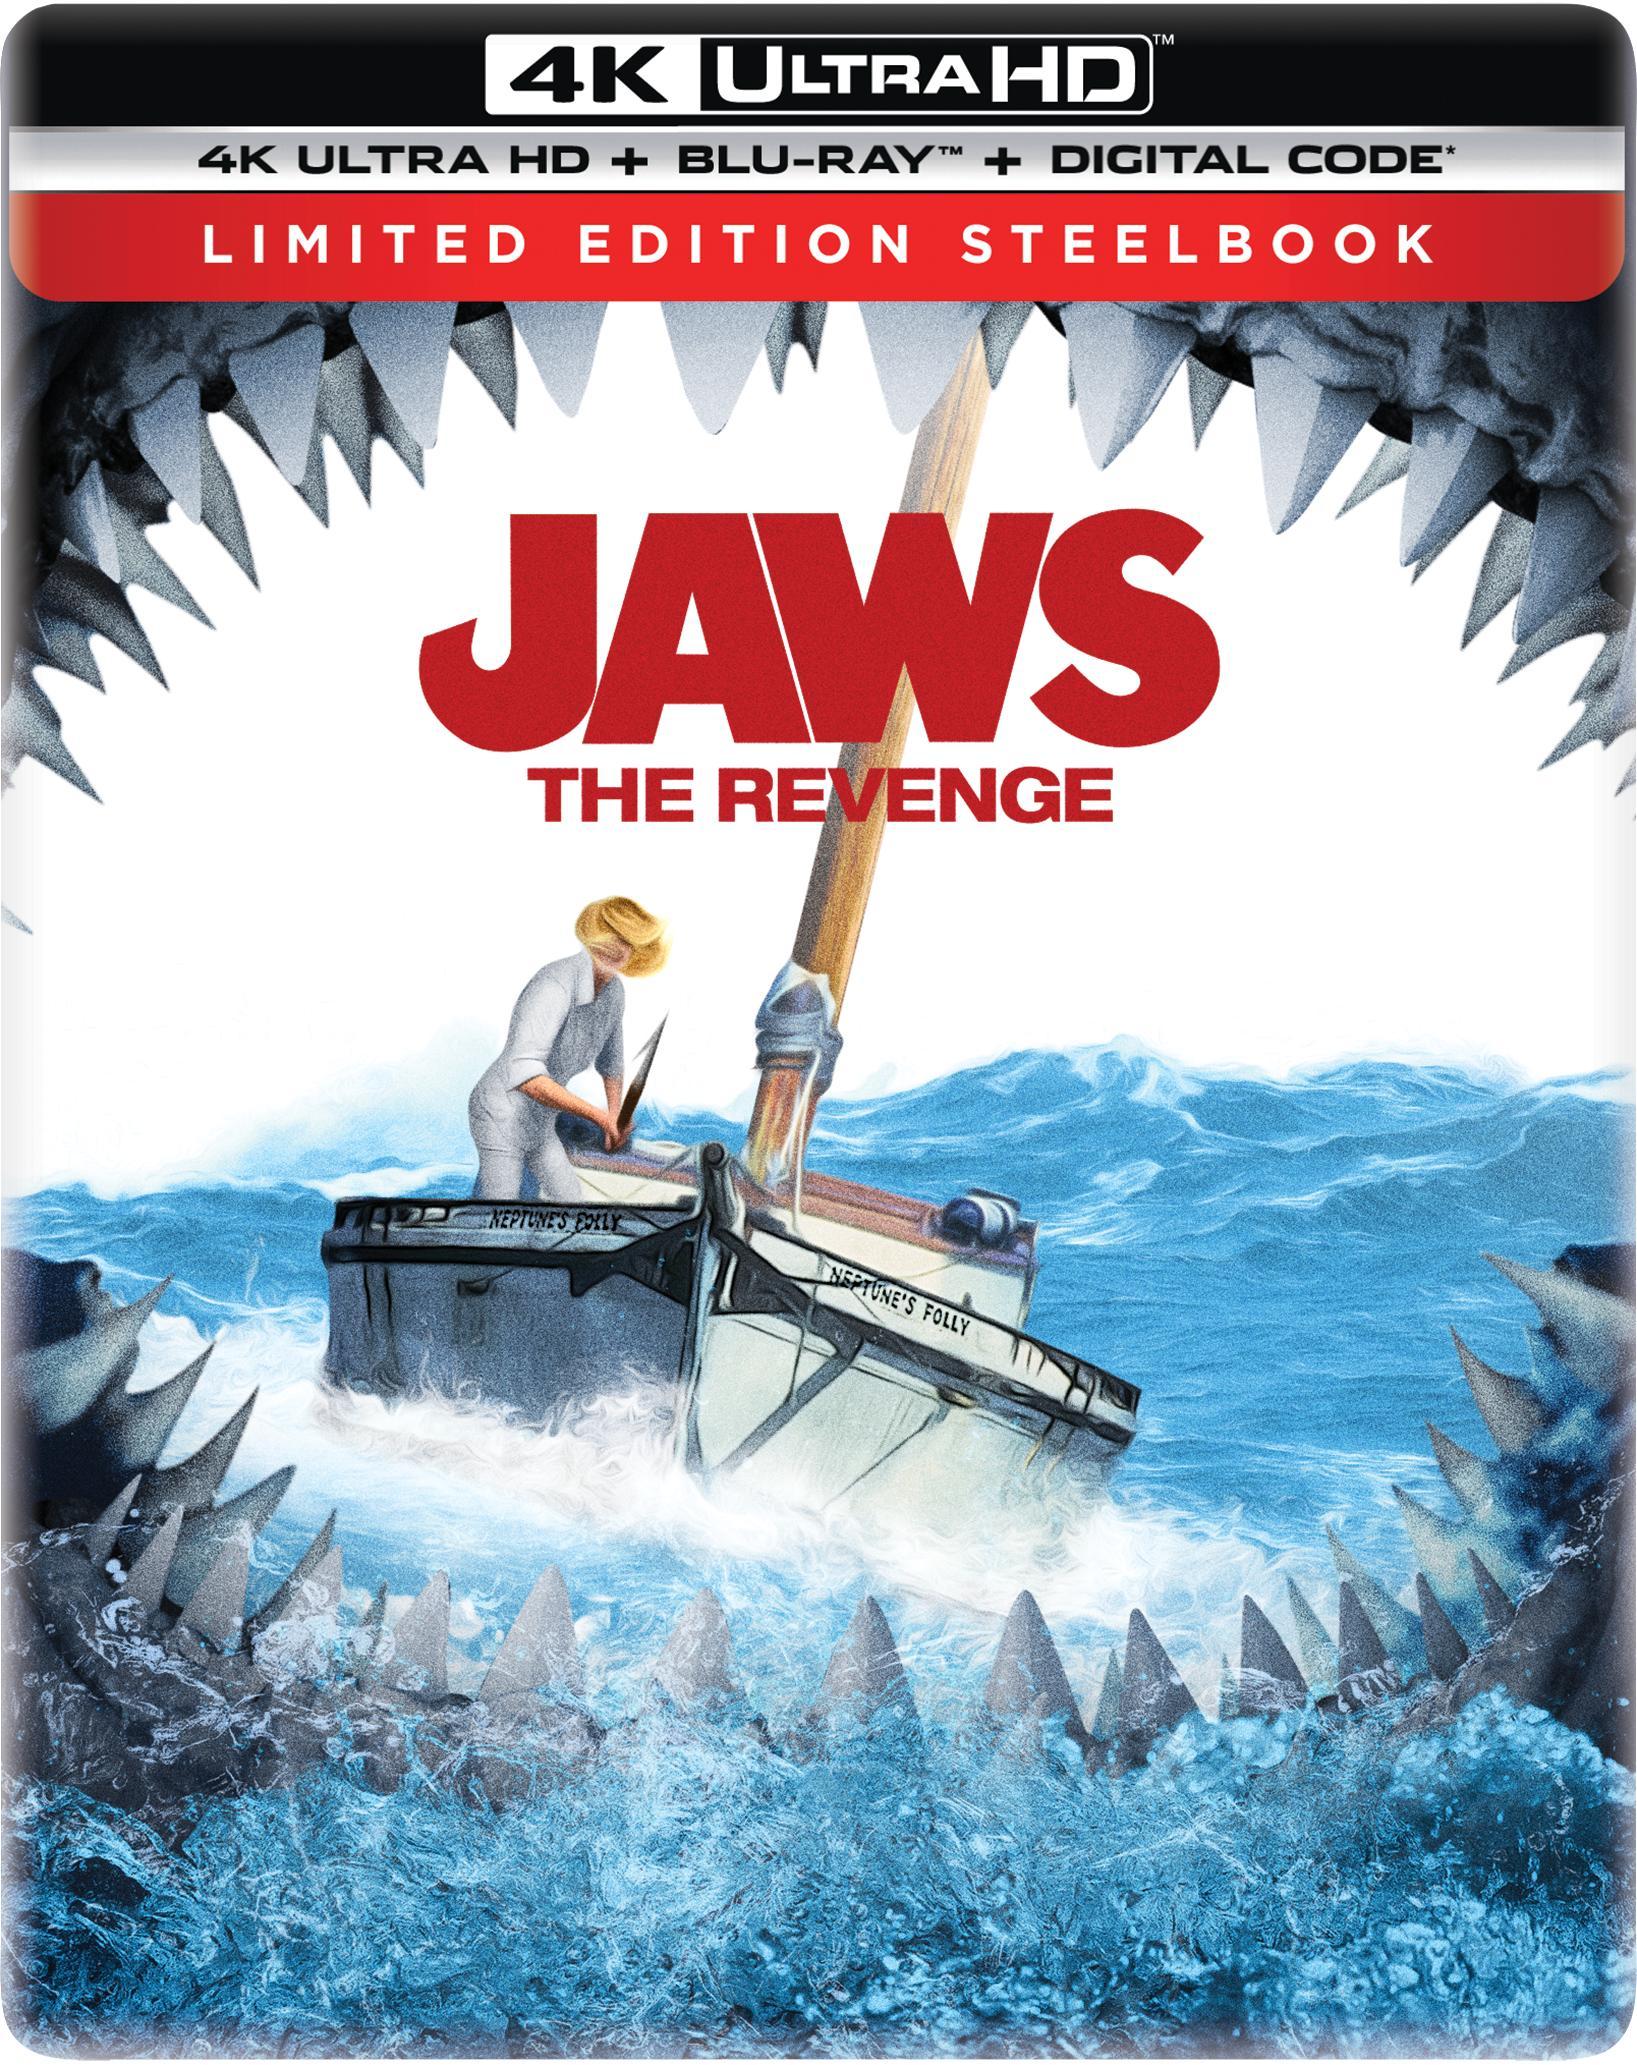 Jaws: The Revenge Limited Edition 4K Steelbook (4K UHD + Blu-ray + Digital Code) [UHD]